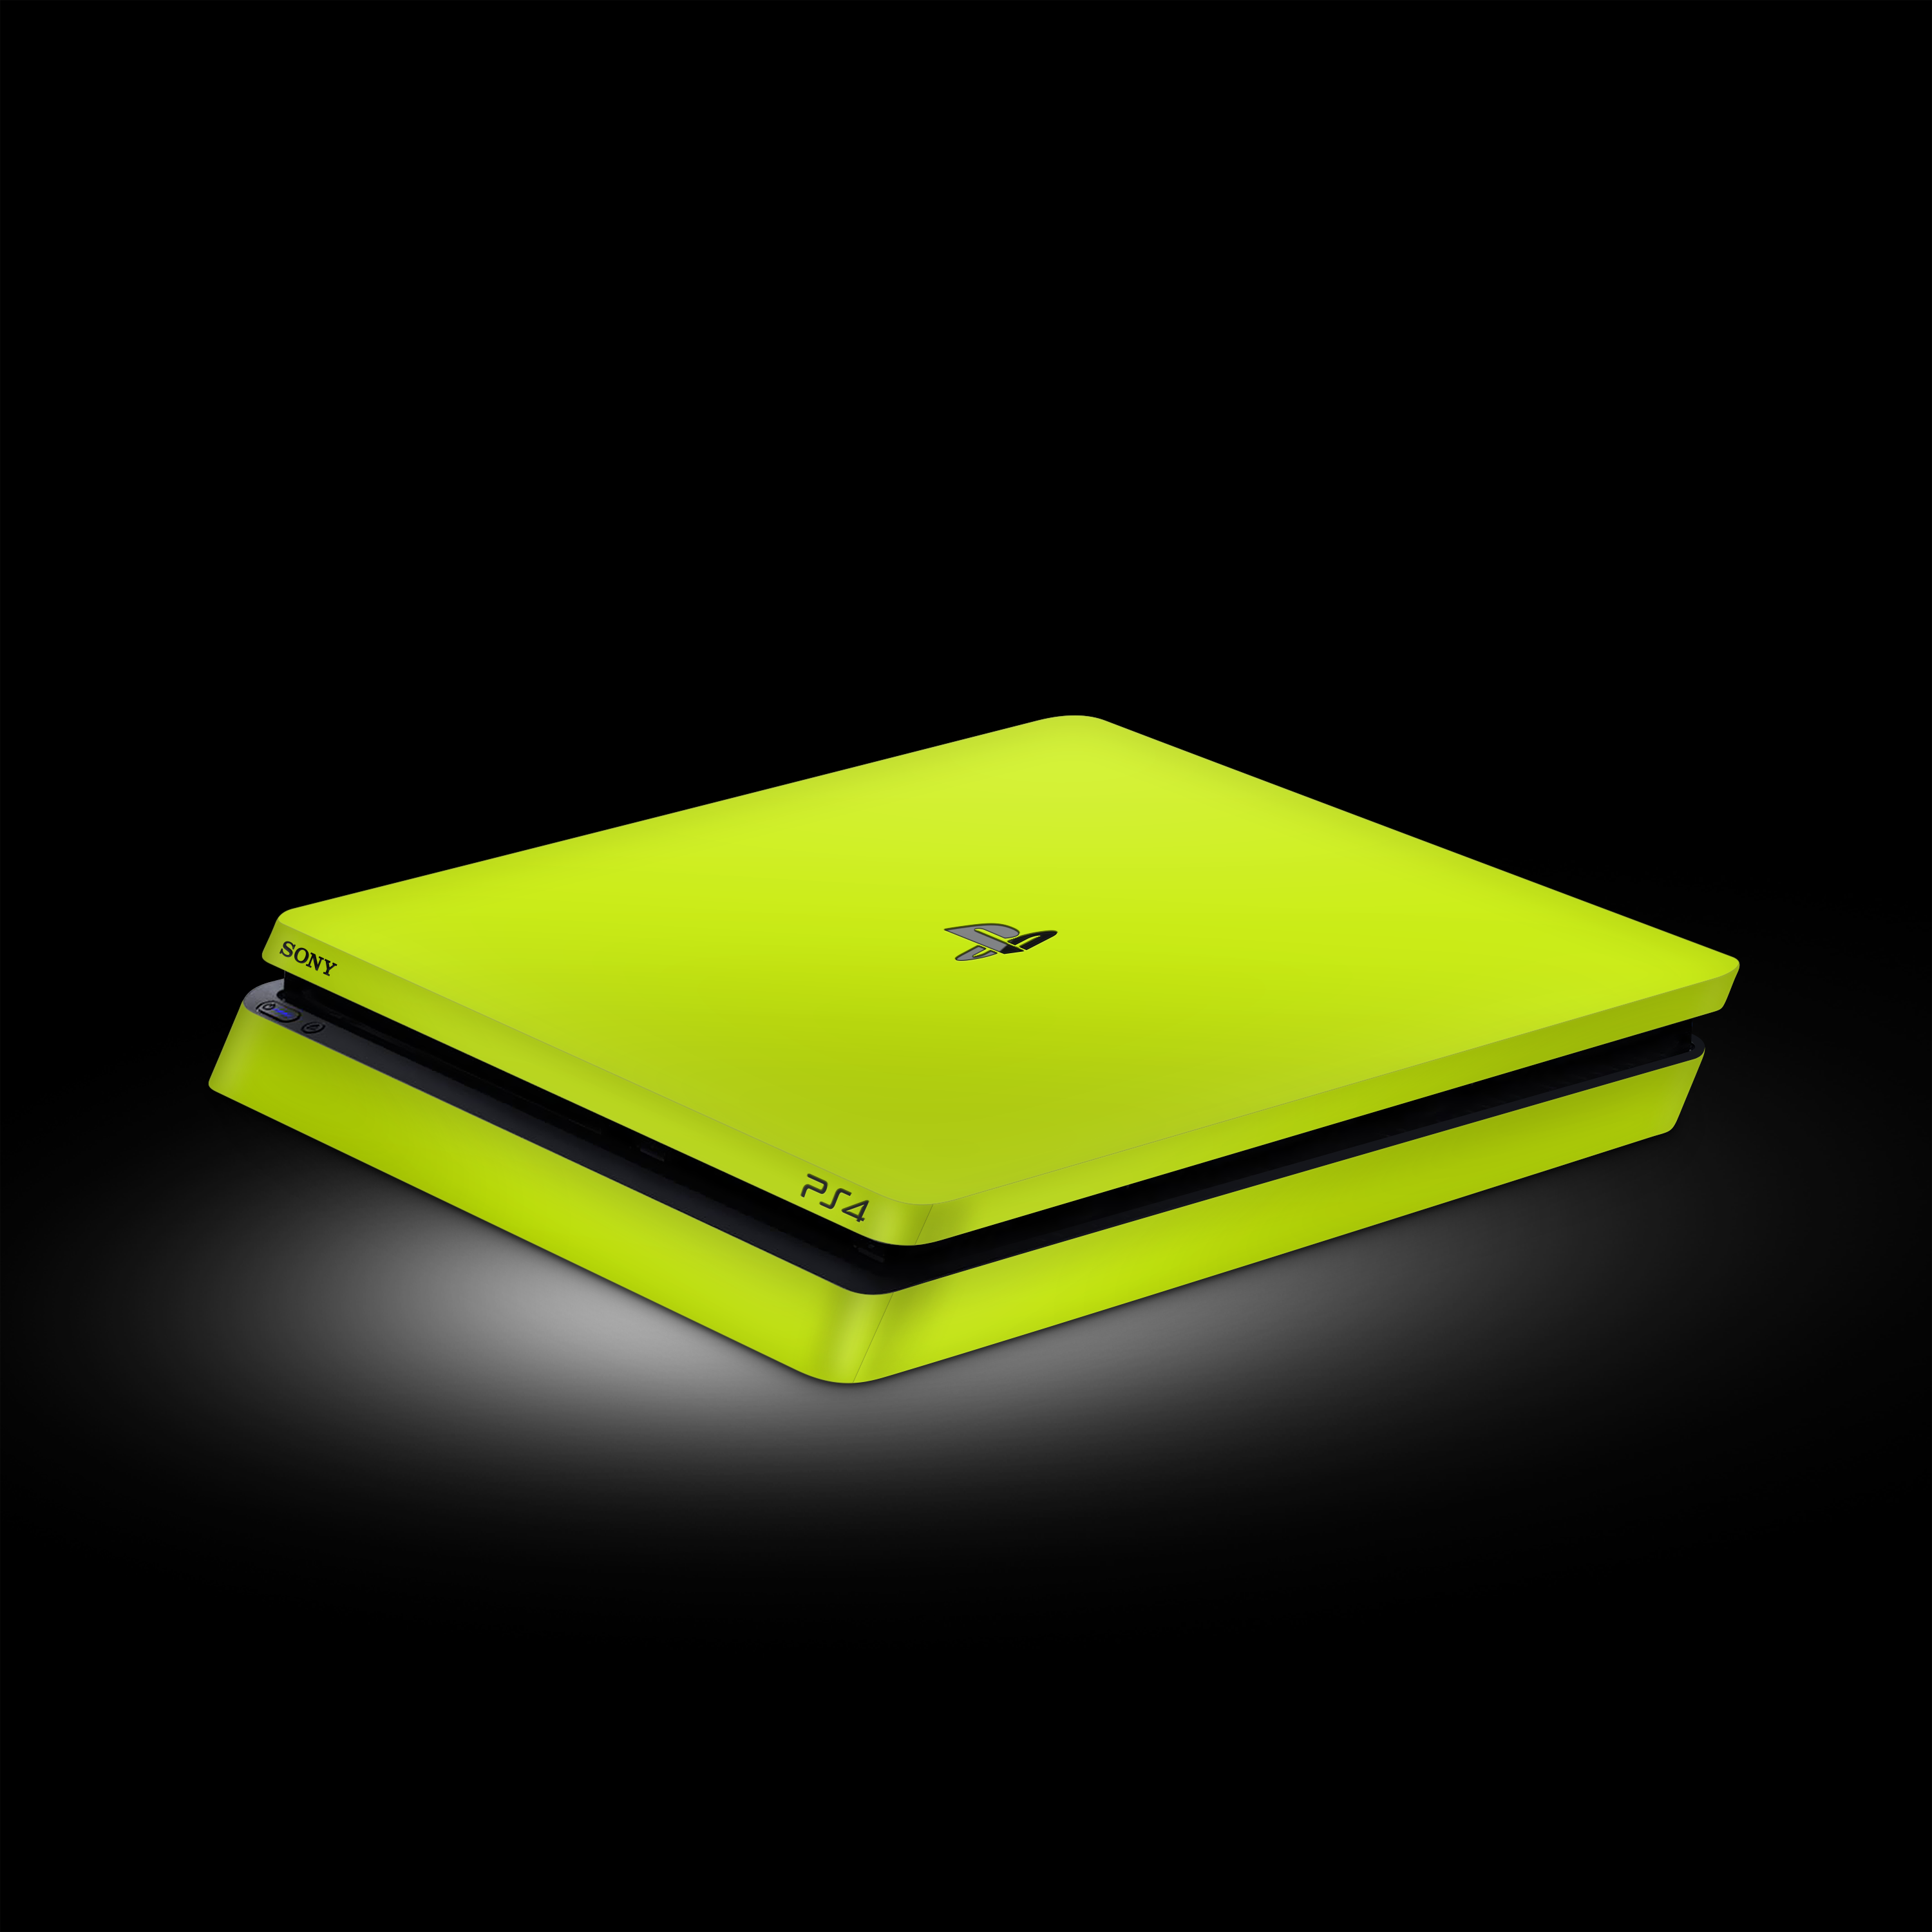 Neon Yellow (PlayStation 4 Slim Skin)